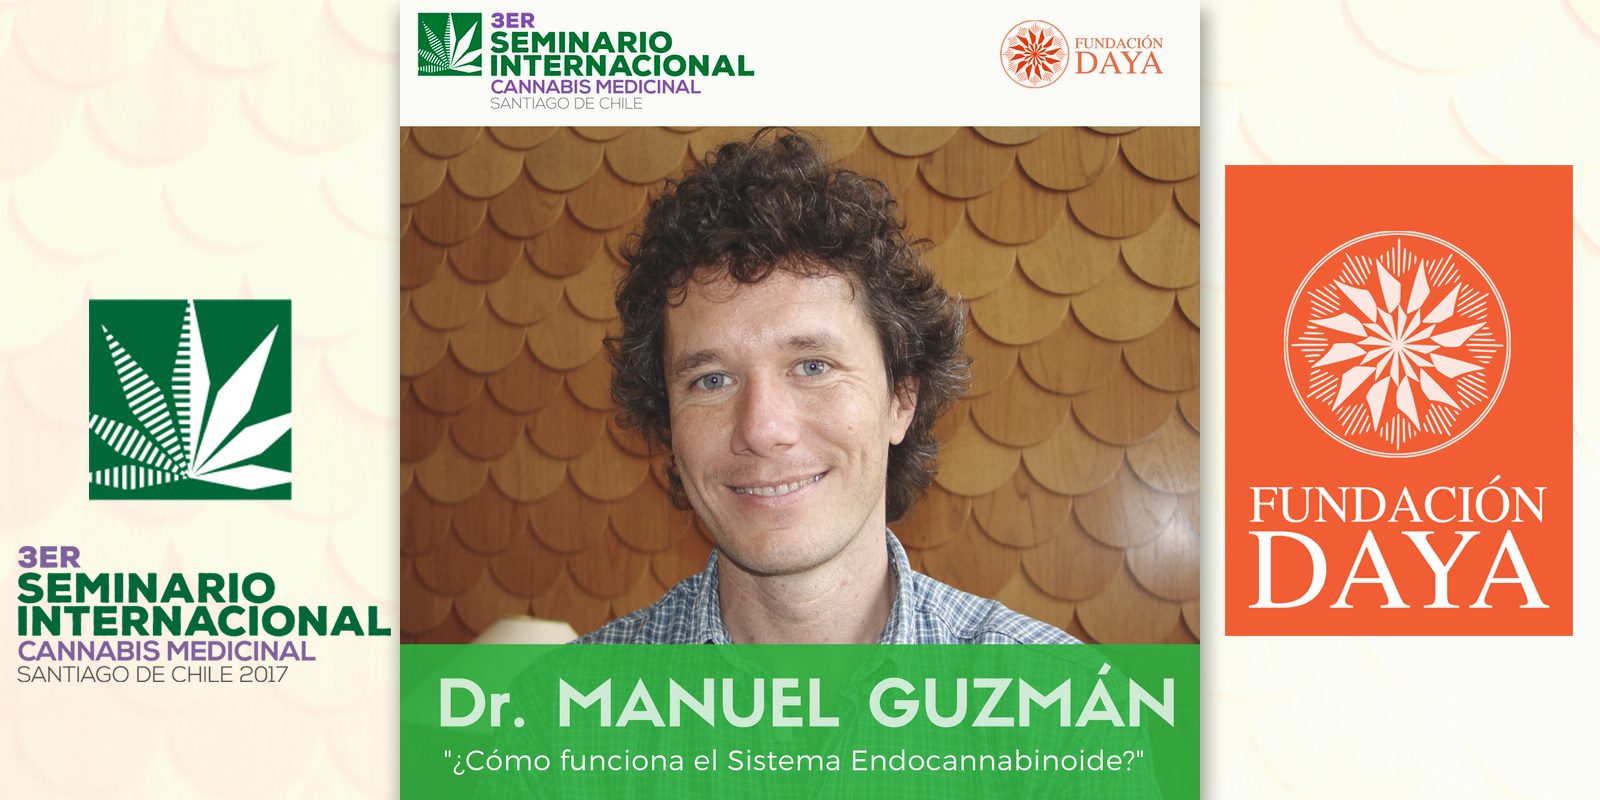 3rd International Medicinal Cannabis Seminar of Santiago de Chile organized by Daya Foundation with the participation of Dr. Manuel Guzmán